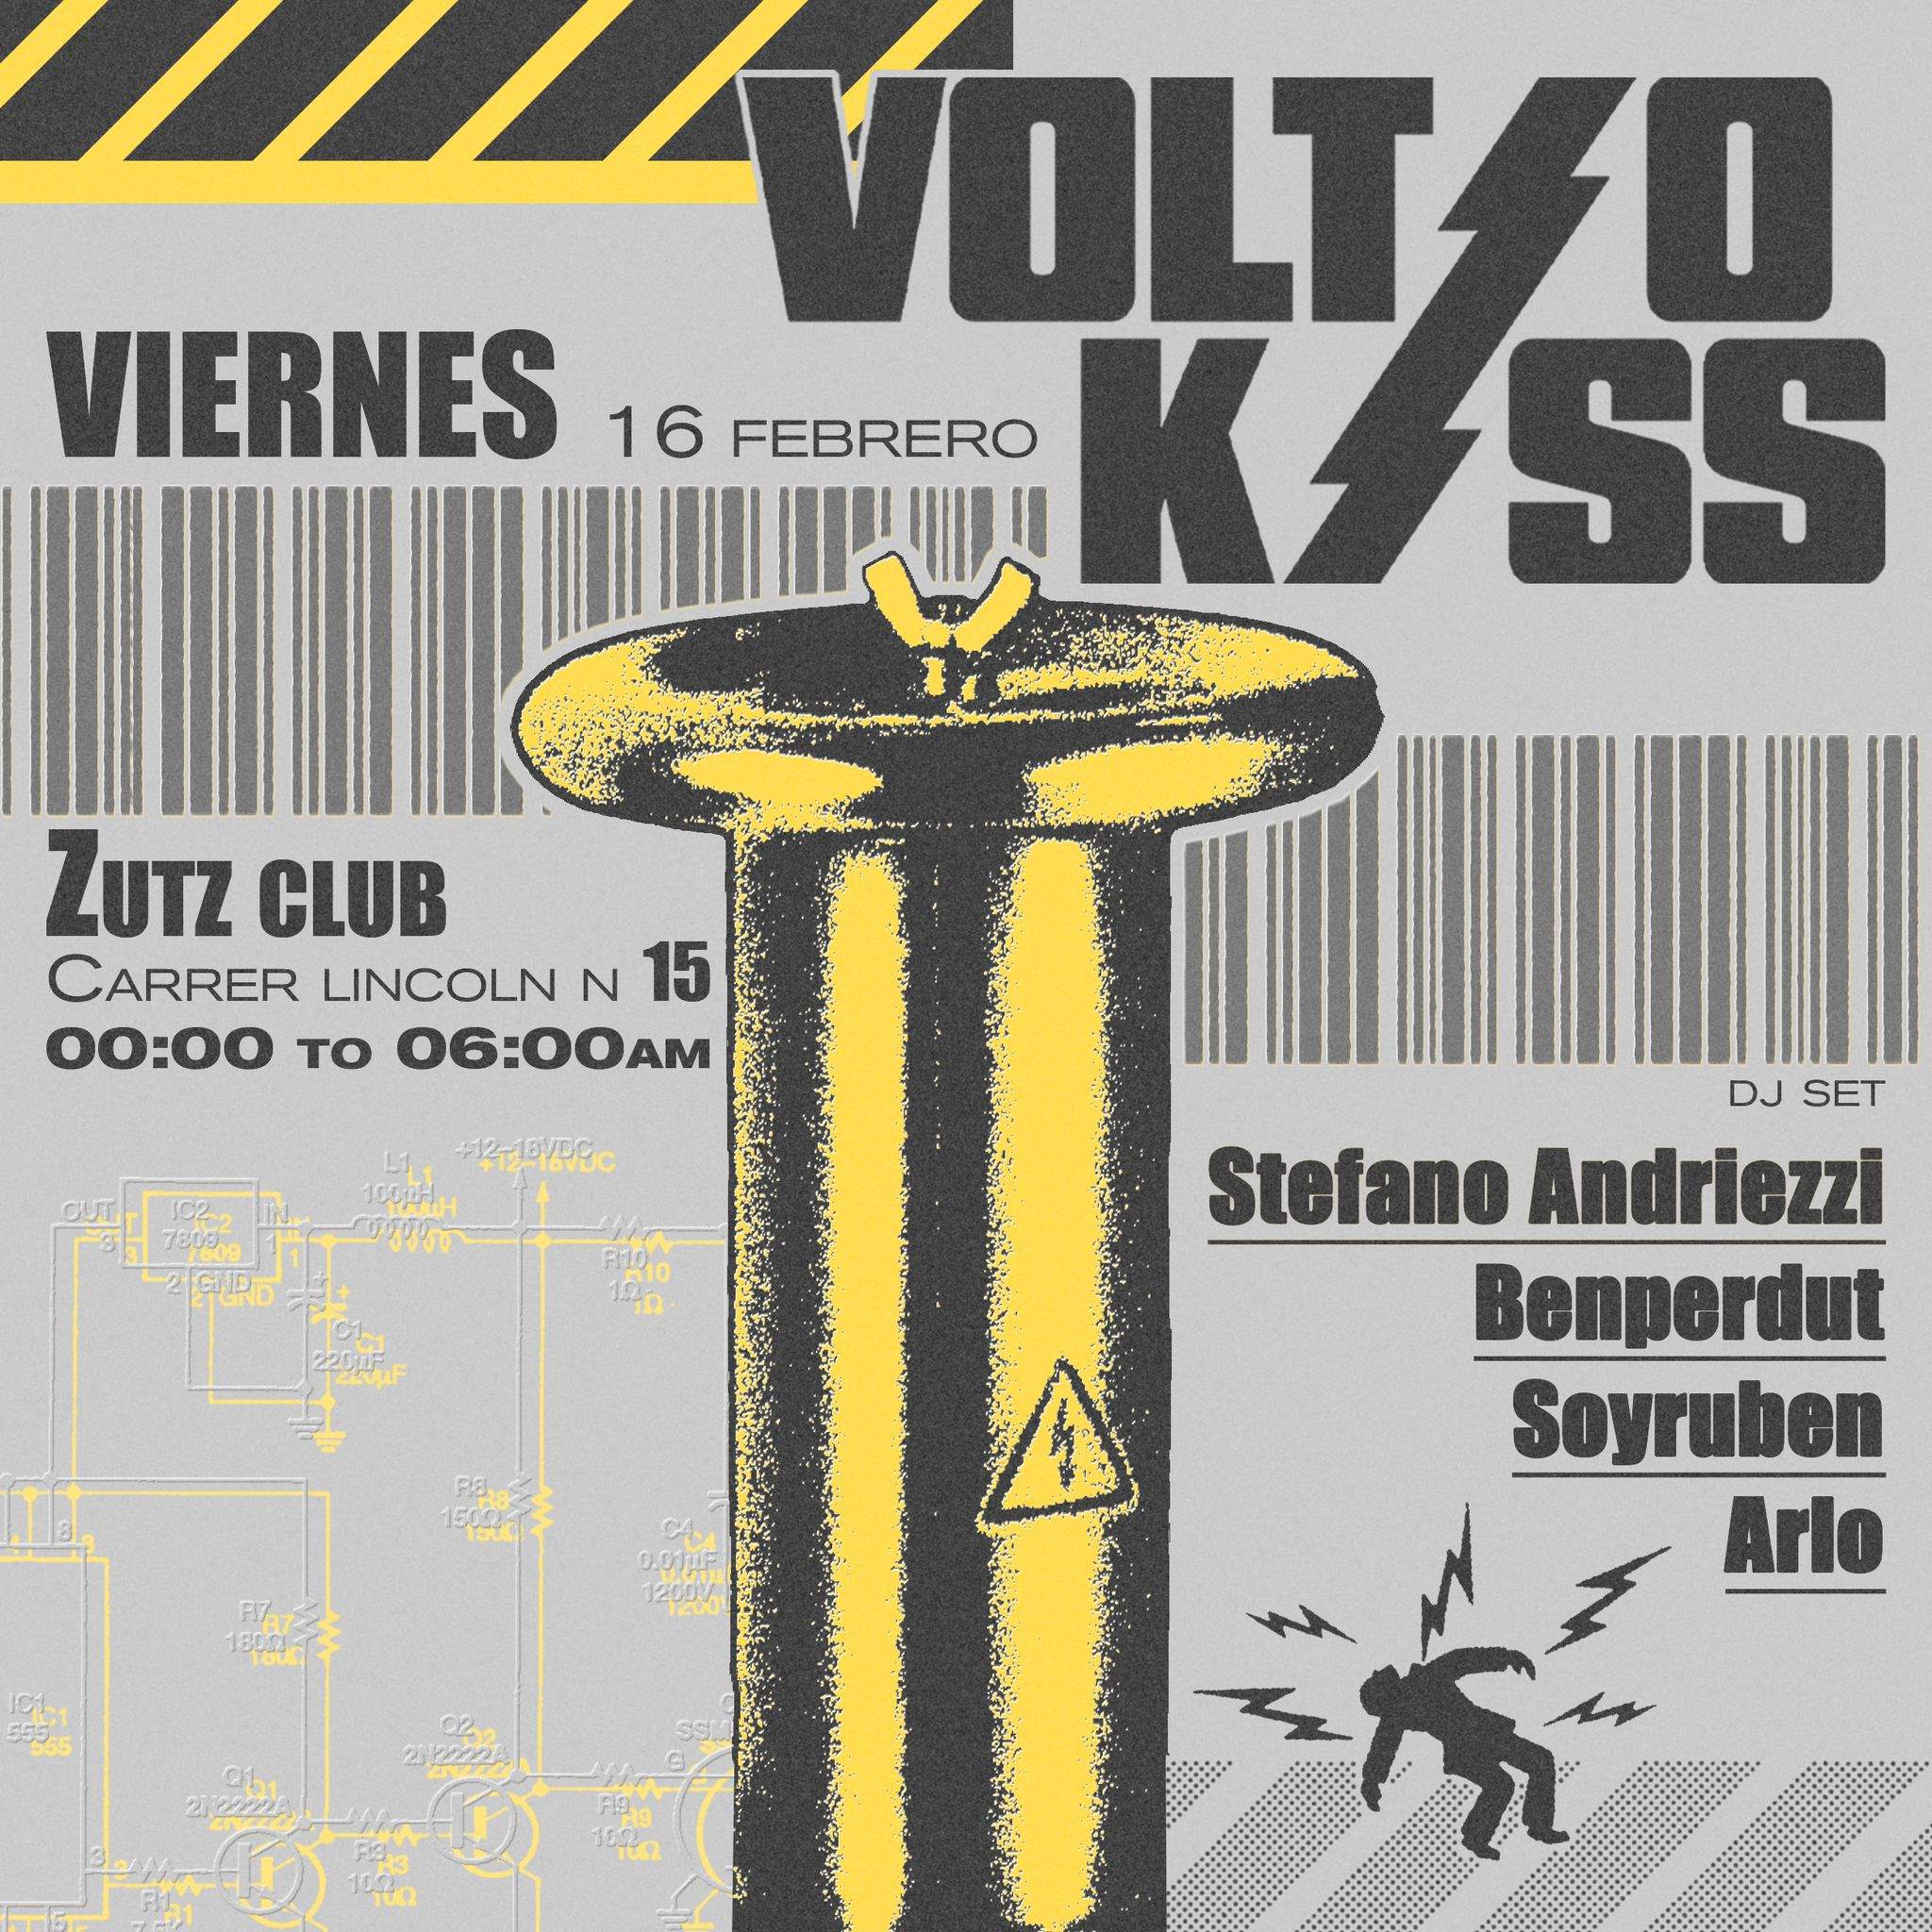 Zutz Club: Voltio Kiss with Stefano Andriezzi, benperdut, Soyruben and Arlo - フライヤー表